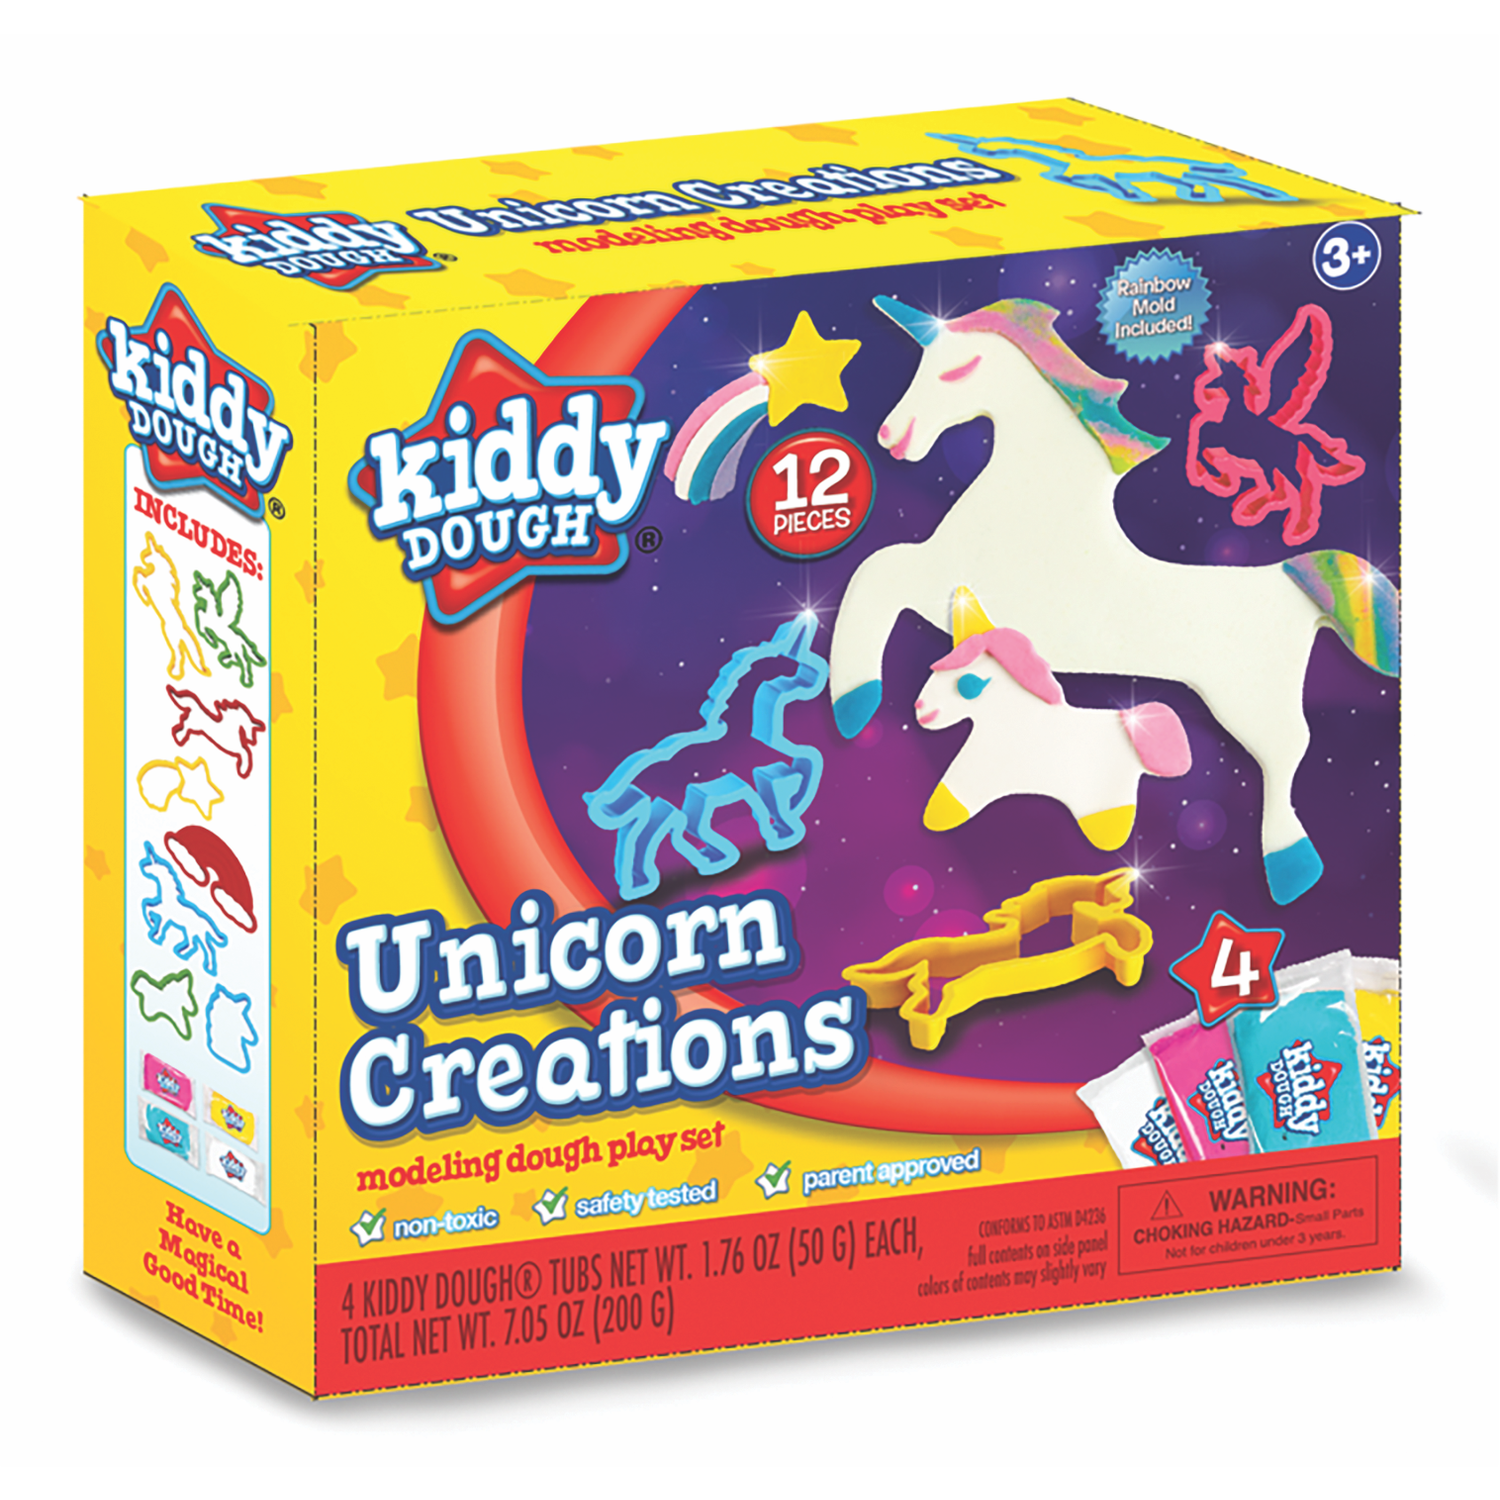 Kiddy Dough Unicorn Creations Modelling Dough Play Set Image